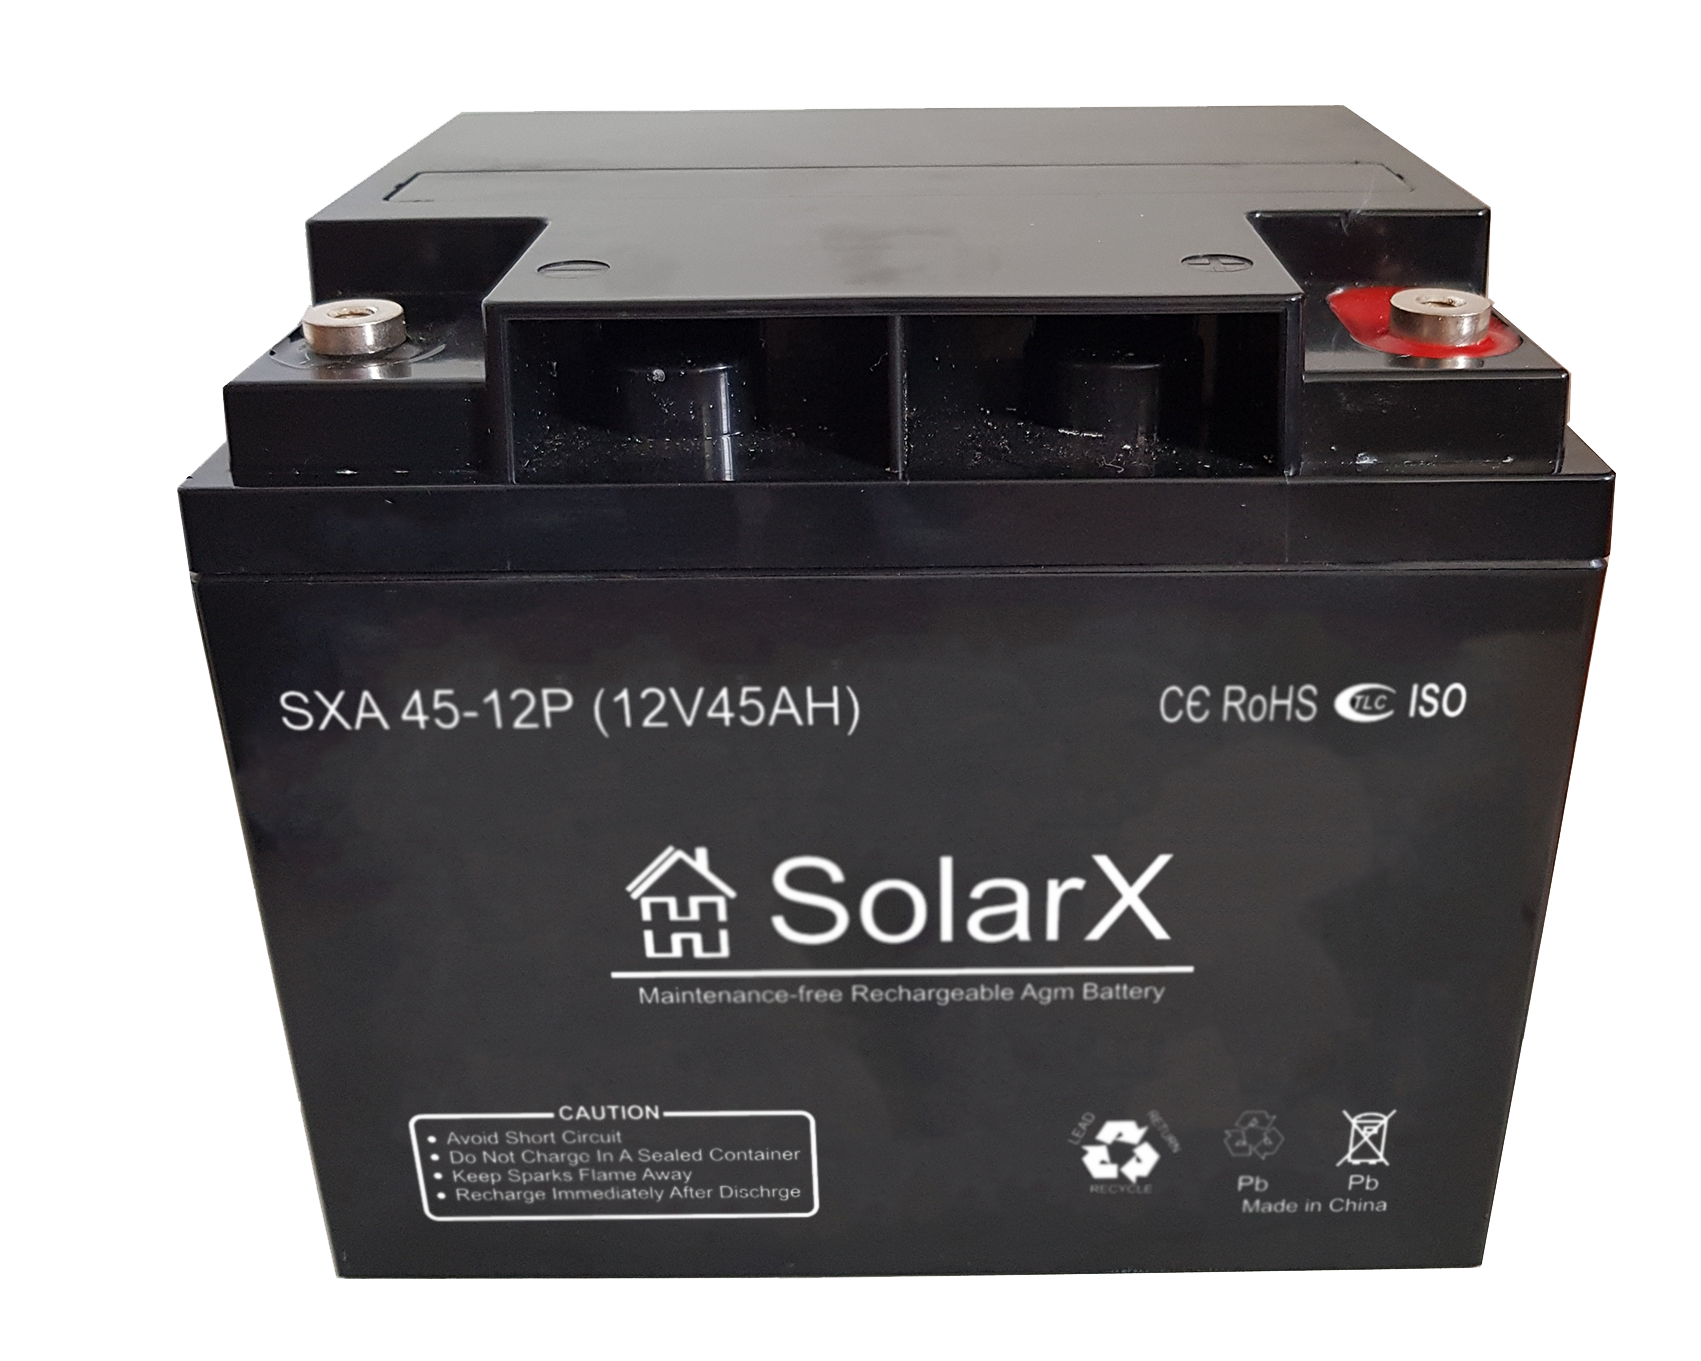 Solarx sxa 45 12p